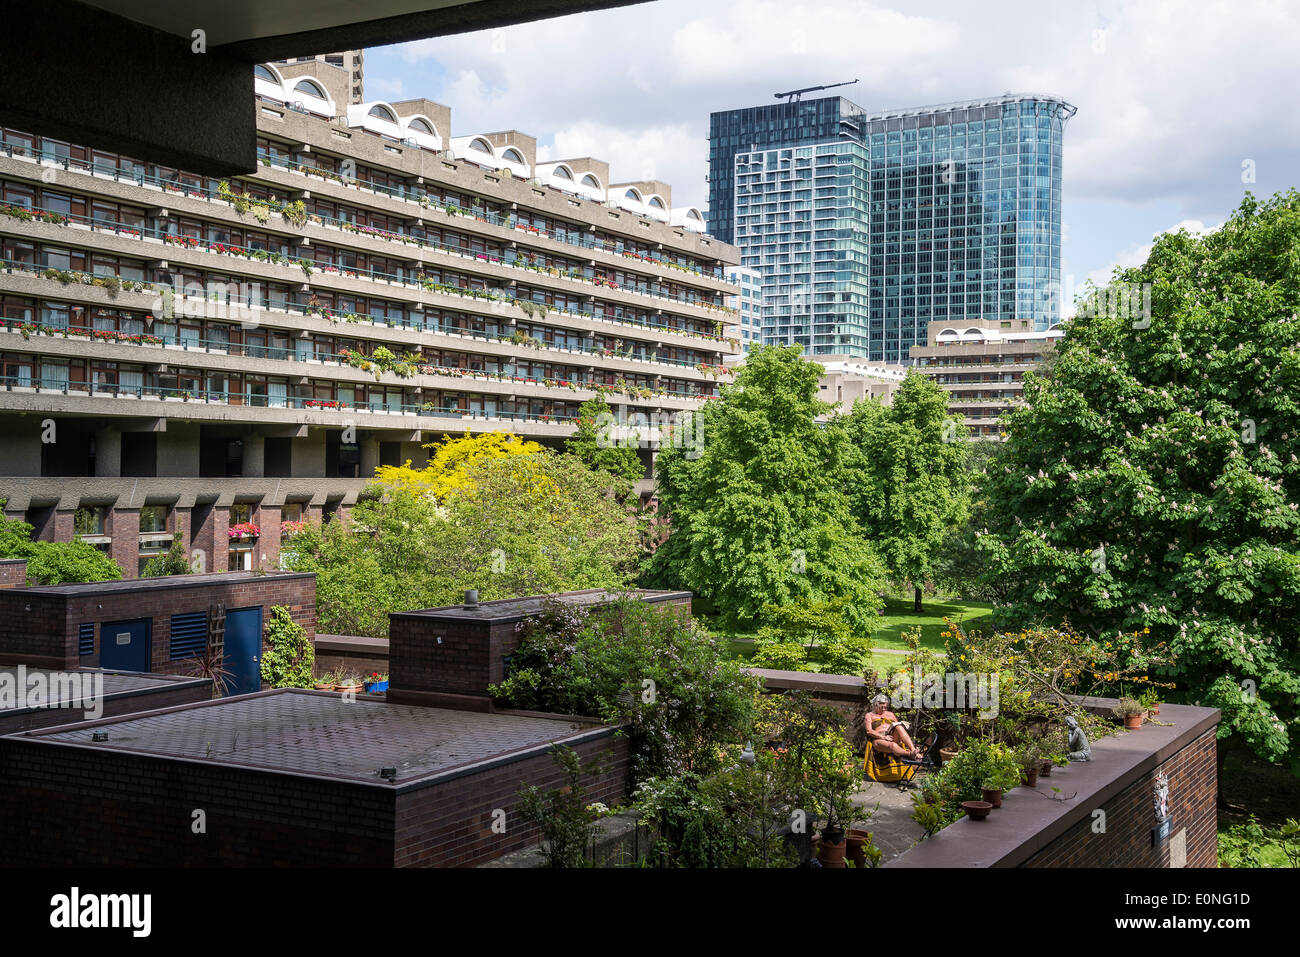 Barbican residential estate, Woman sunbathing, City of London, UK Stock Photo